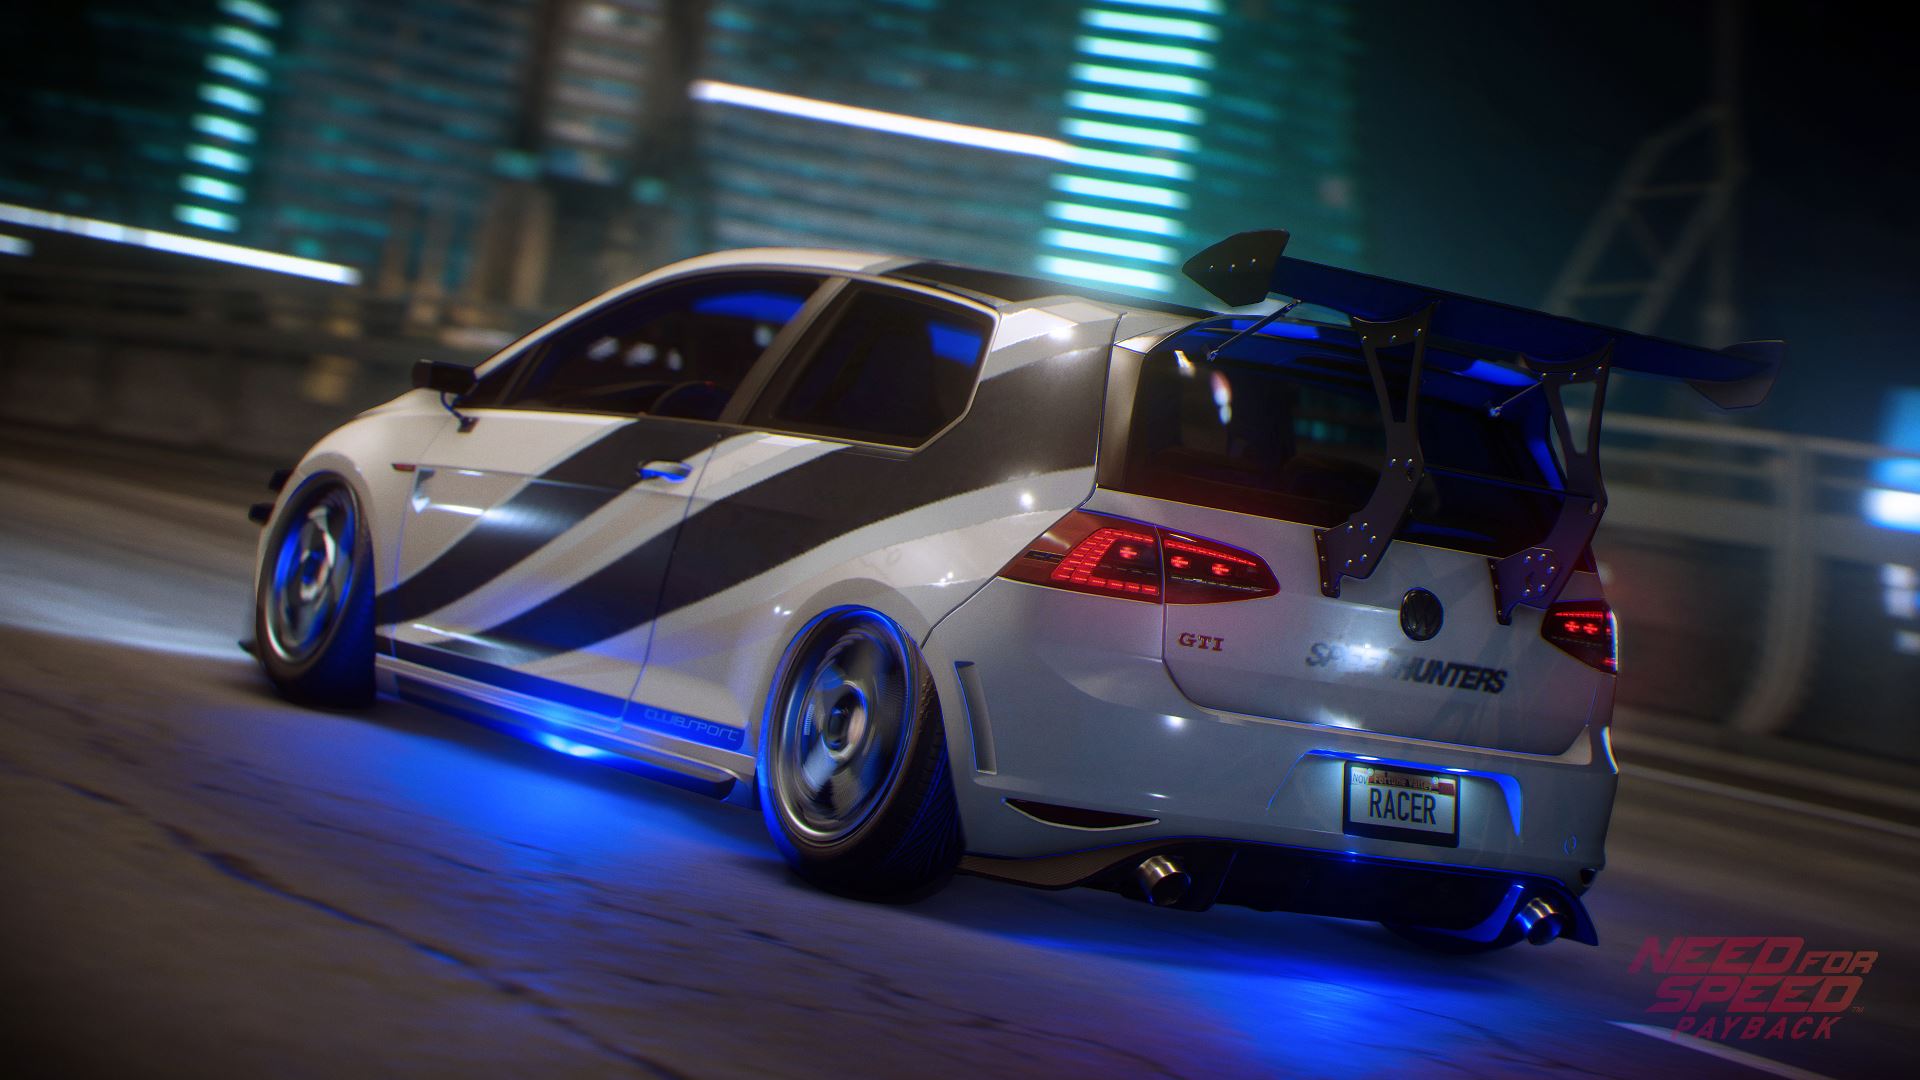 Yeni Need for Speed Payback videosu geliyor